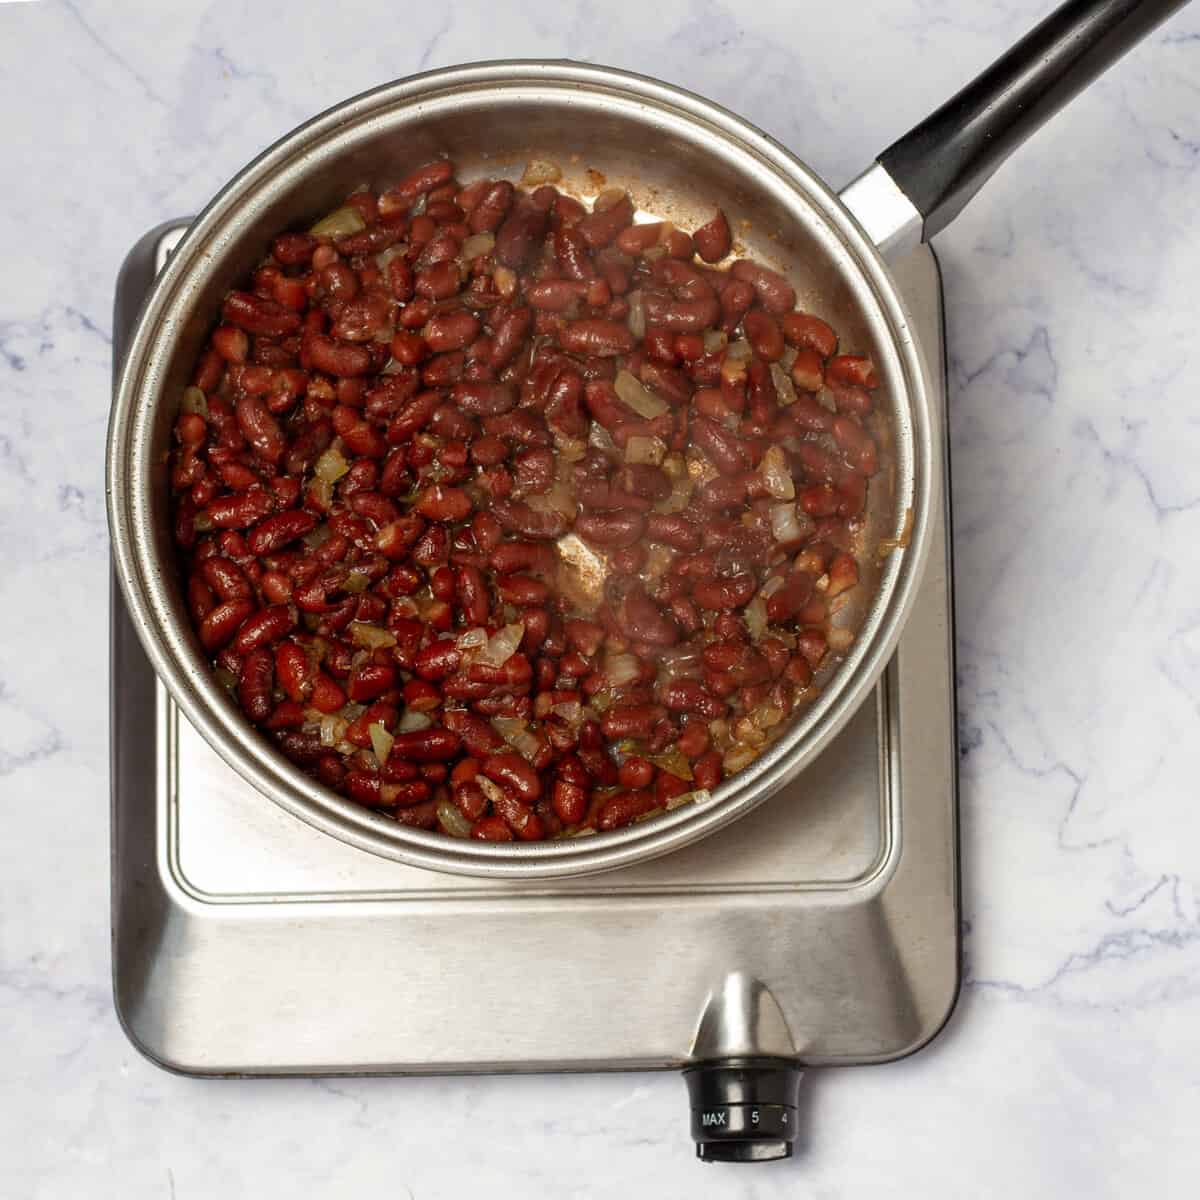 black beans cooking in a saucepan